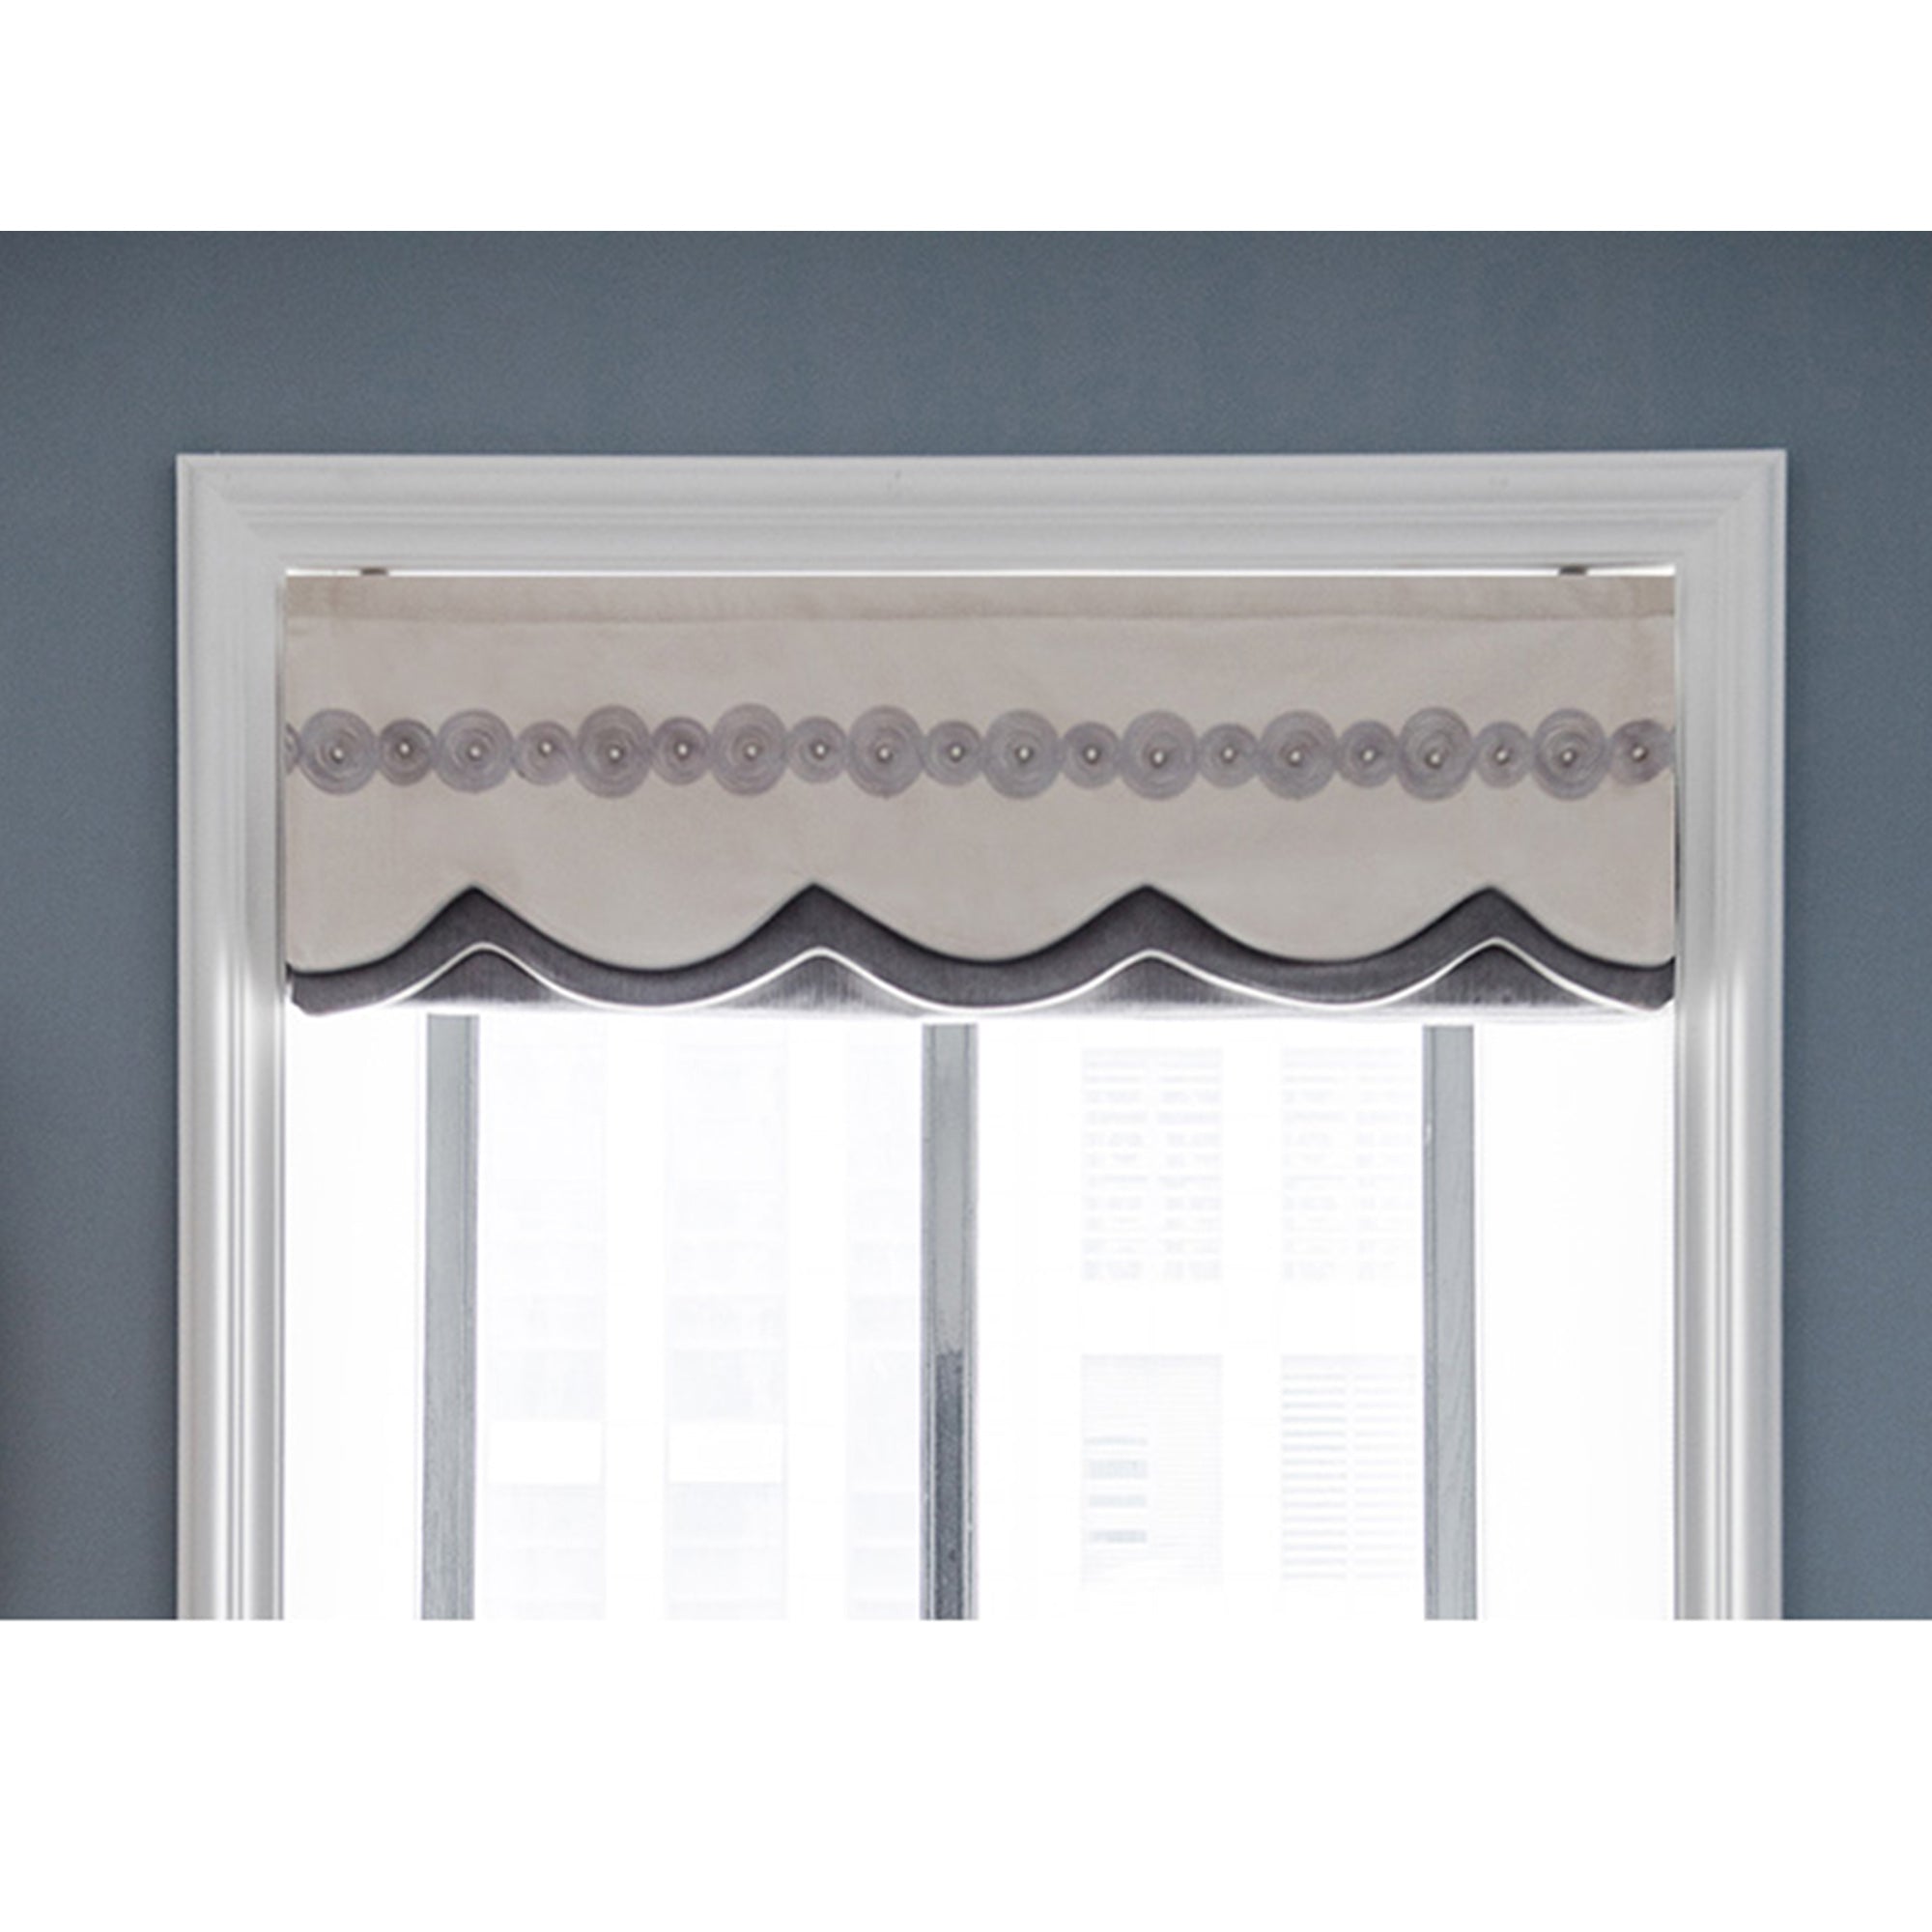 Quick Fix Washable Roman Window Shades Flat Fold with Valance - Smoke Grey SG-124